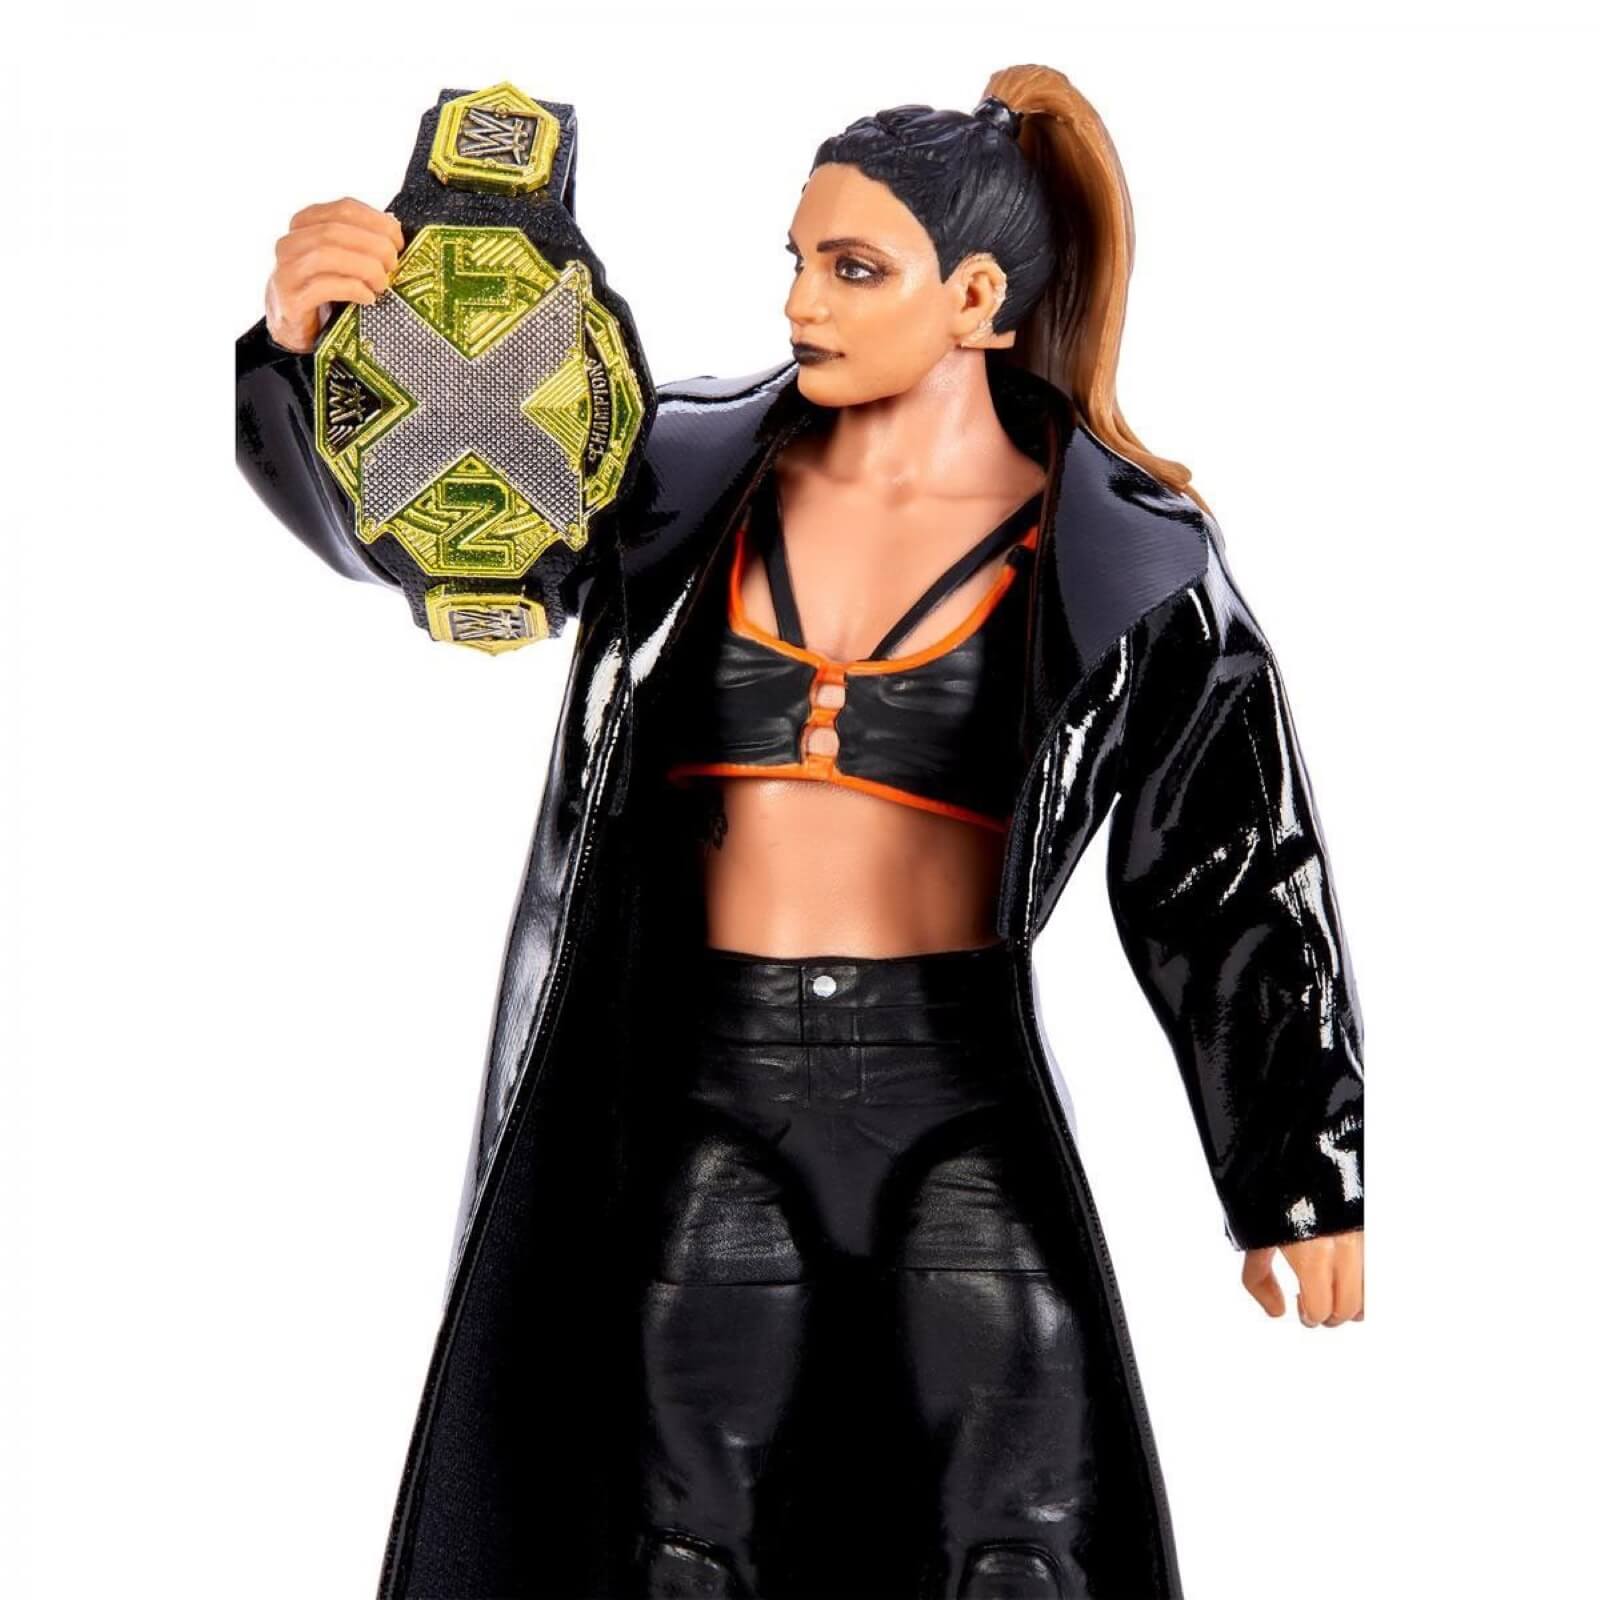 Mattel WWE NXT Elite Collection Action Figure - Raquel Gonzalez